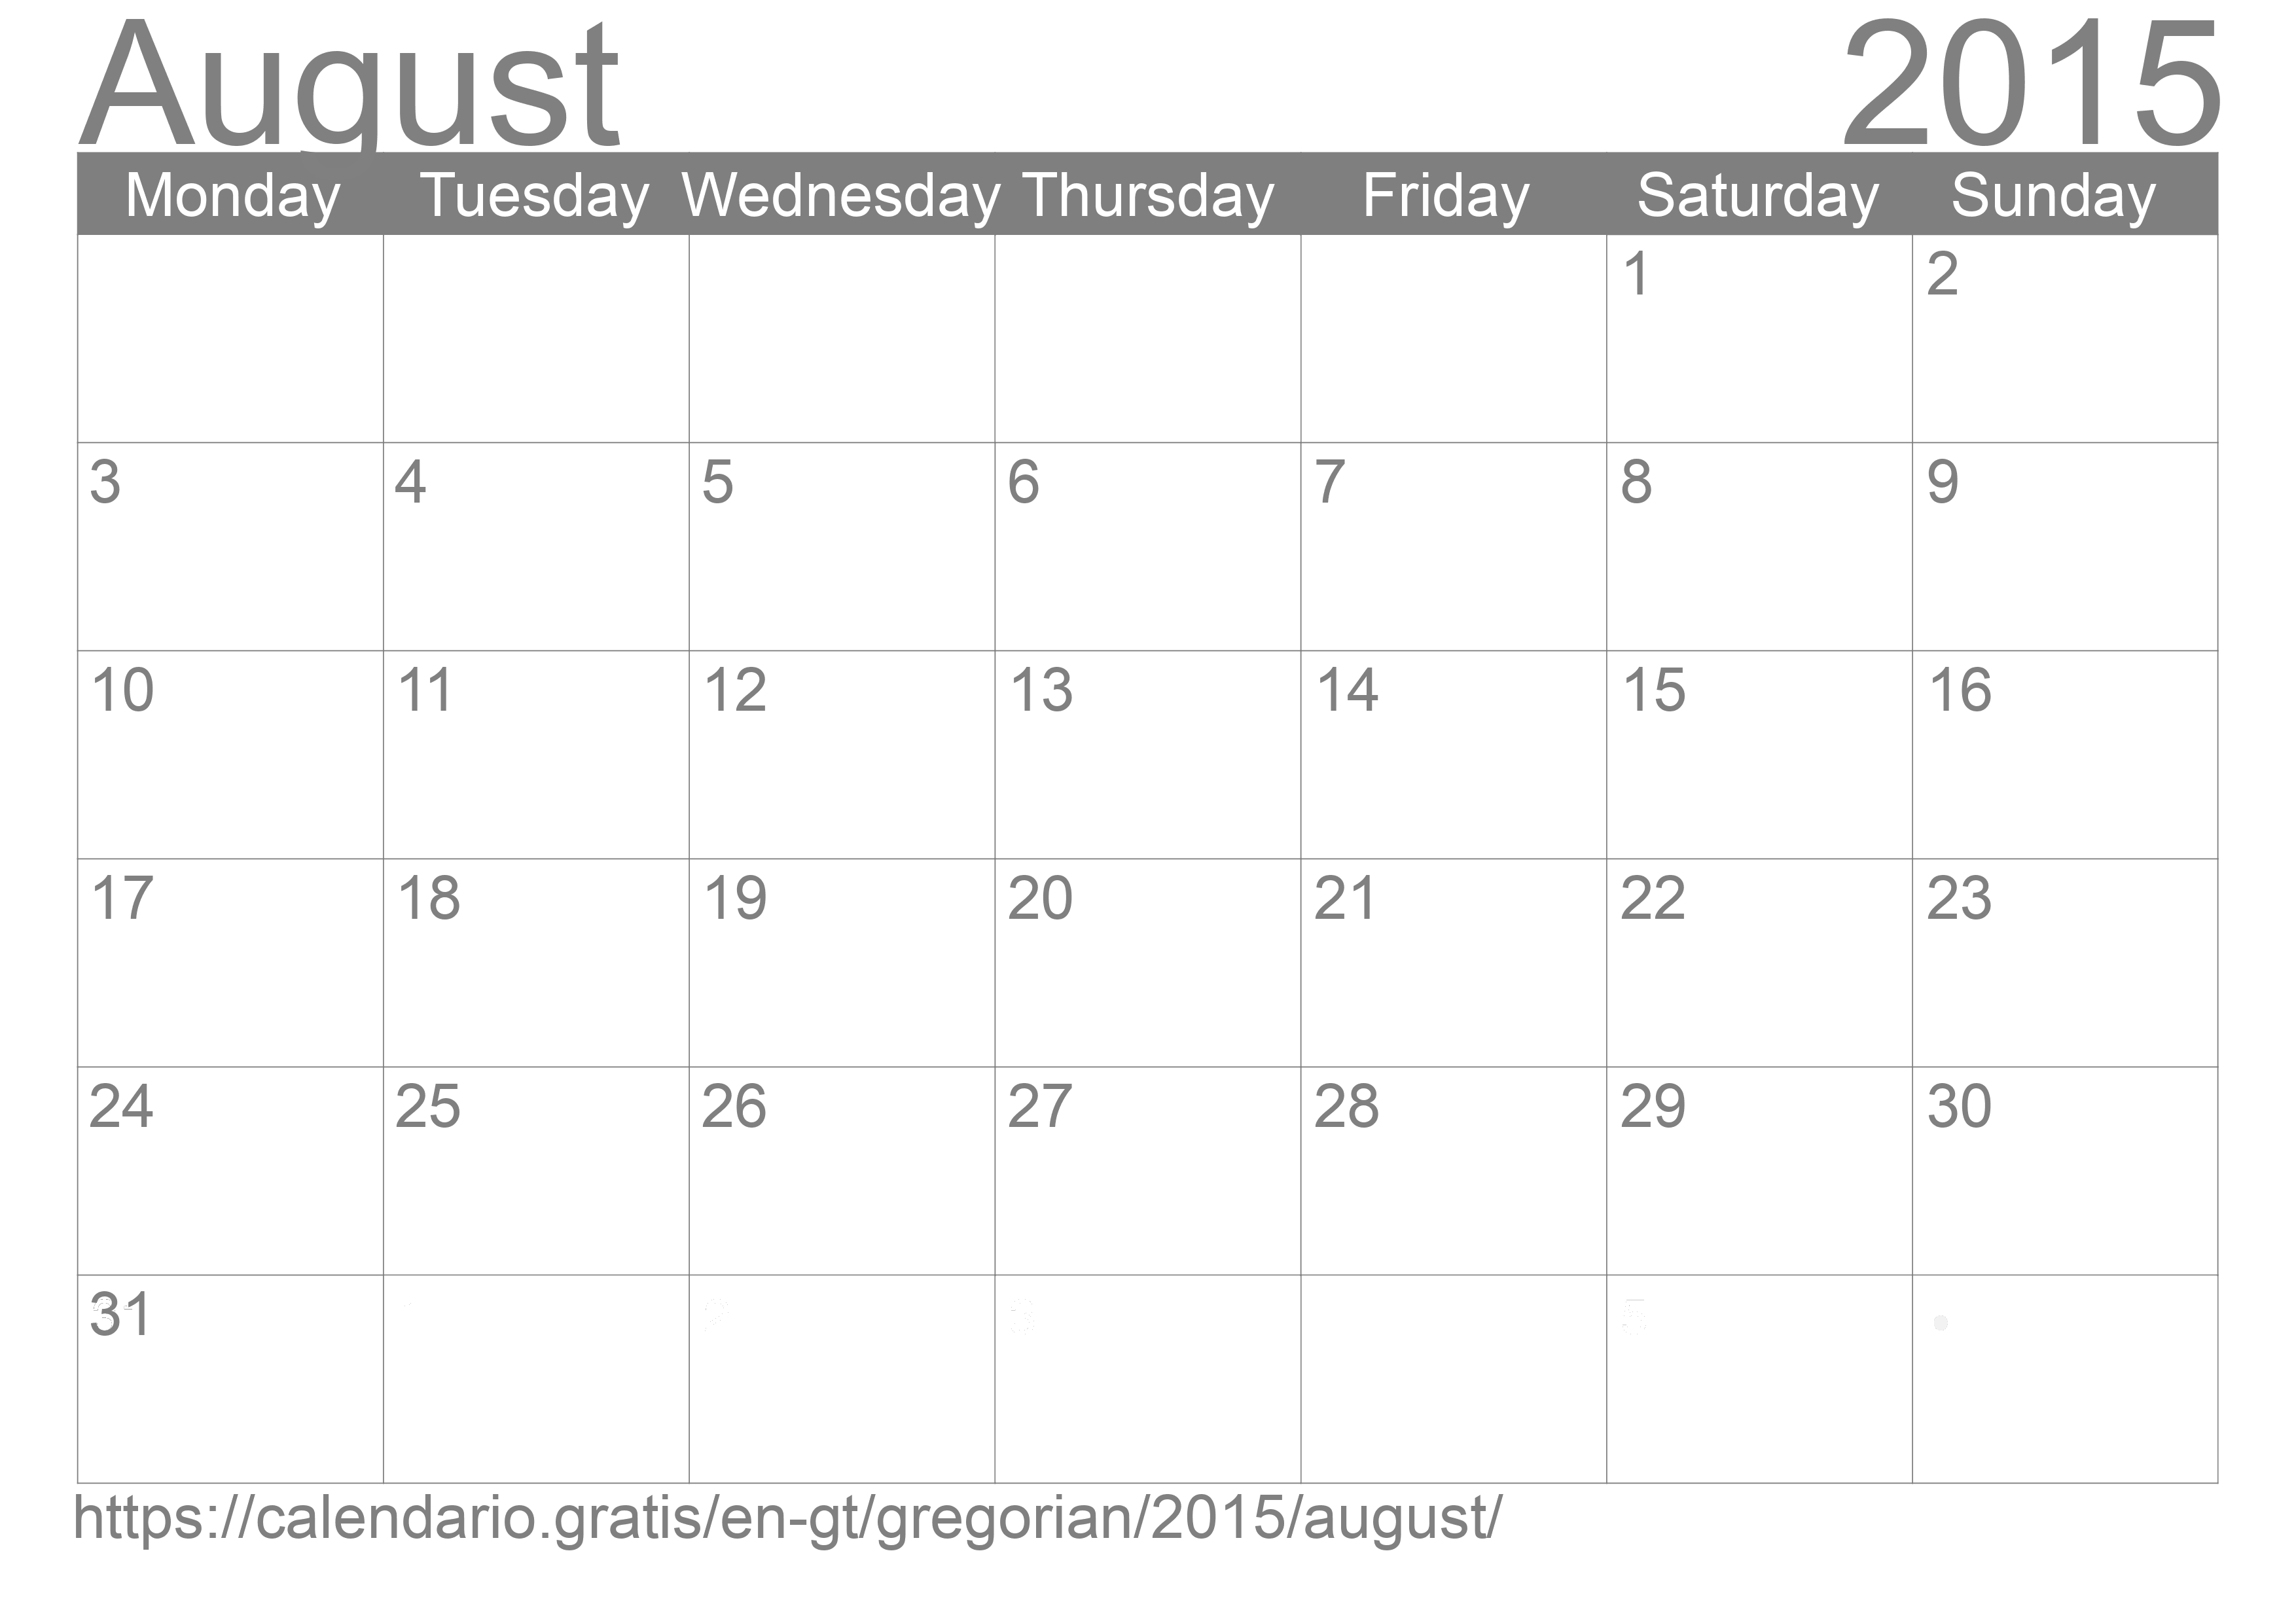 Calendar August 2015 to print